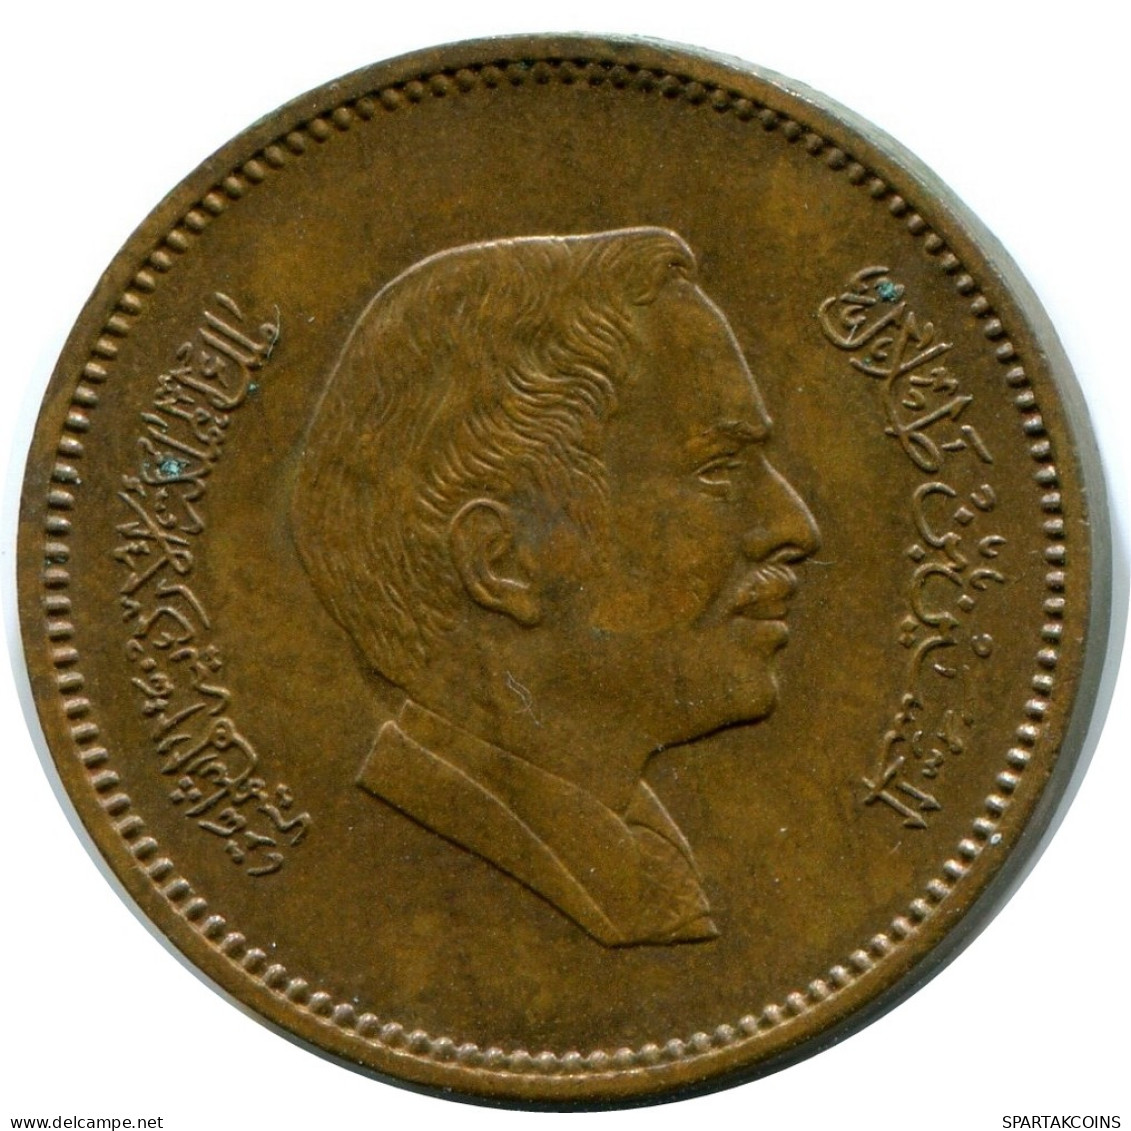 1/2 QIRSH 5 FILS 1978 JORDAN Islamic Coin #AW798.U - Jordanië